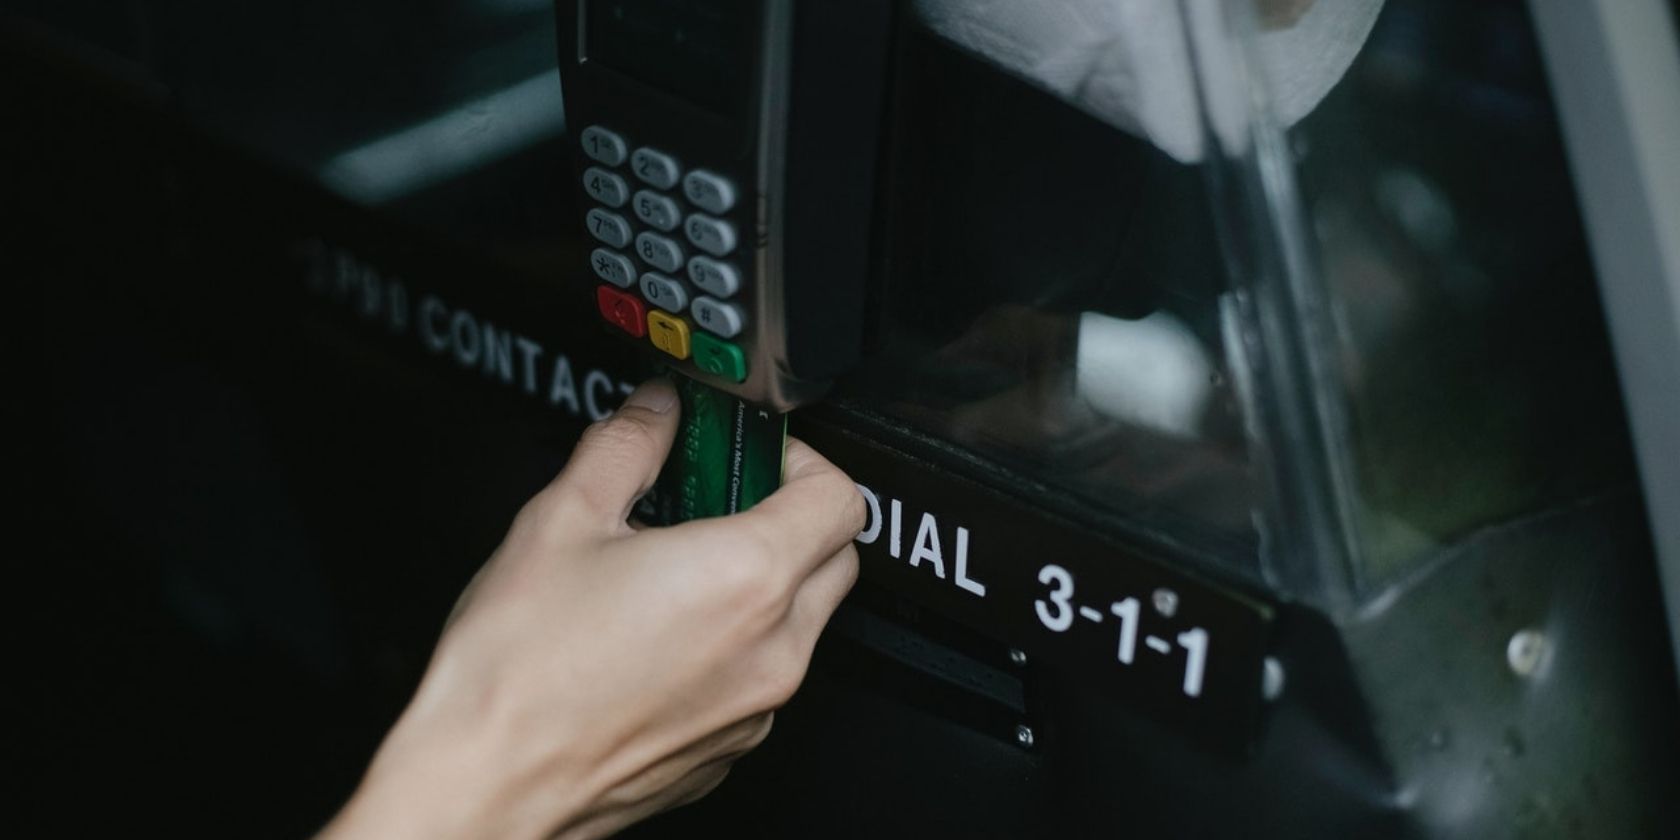 credit card swipe payment on machine